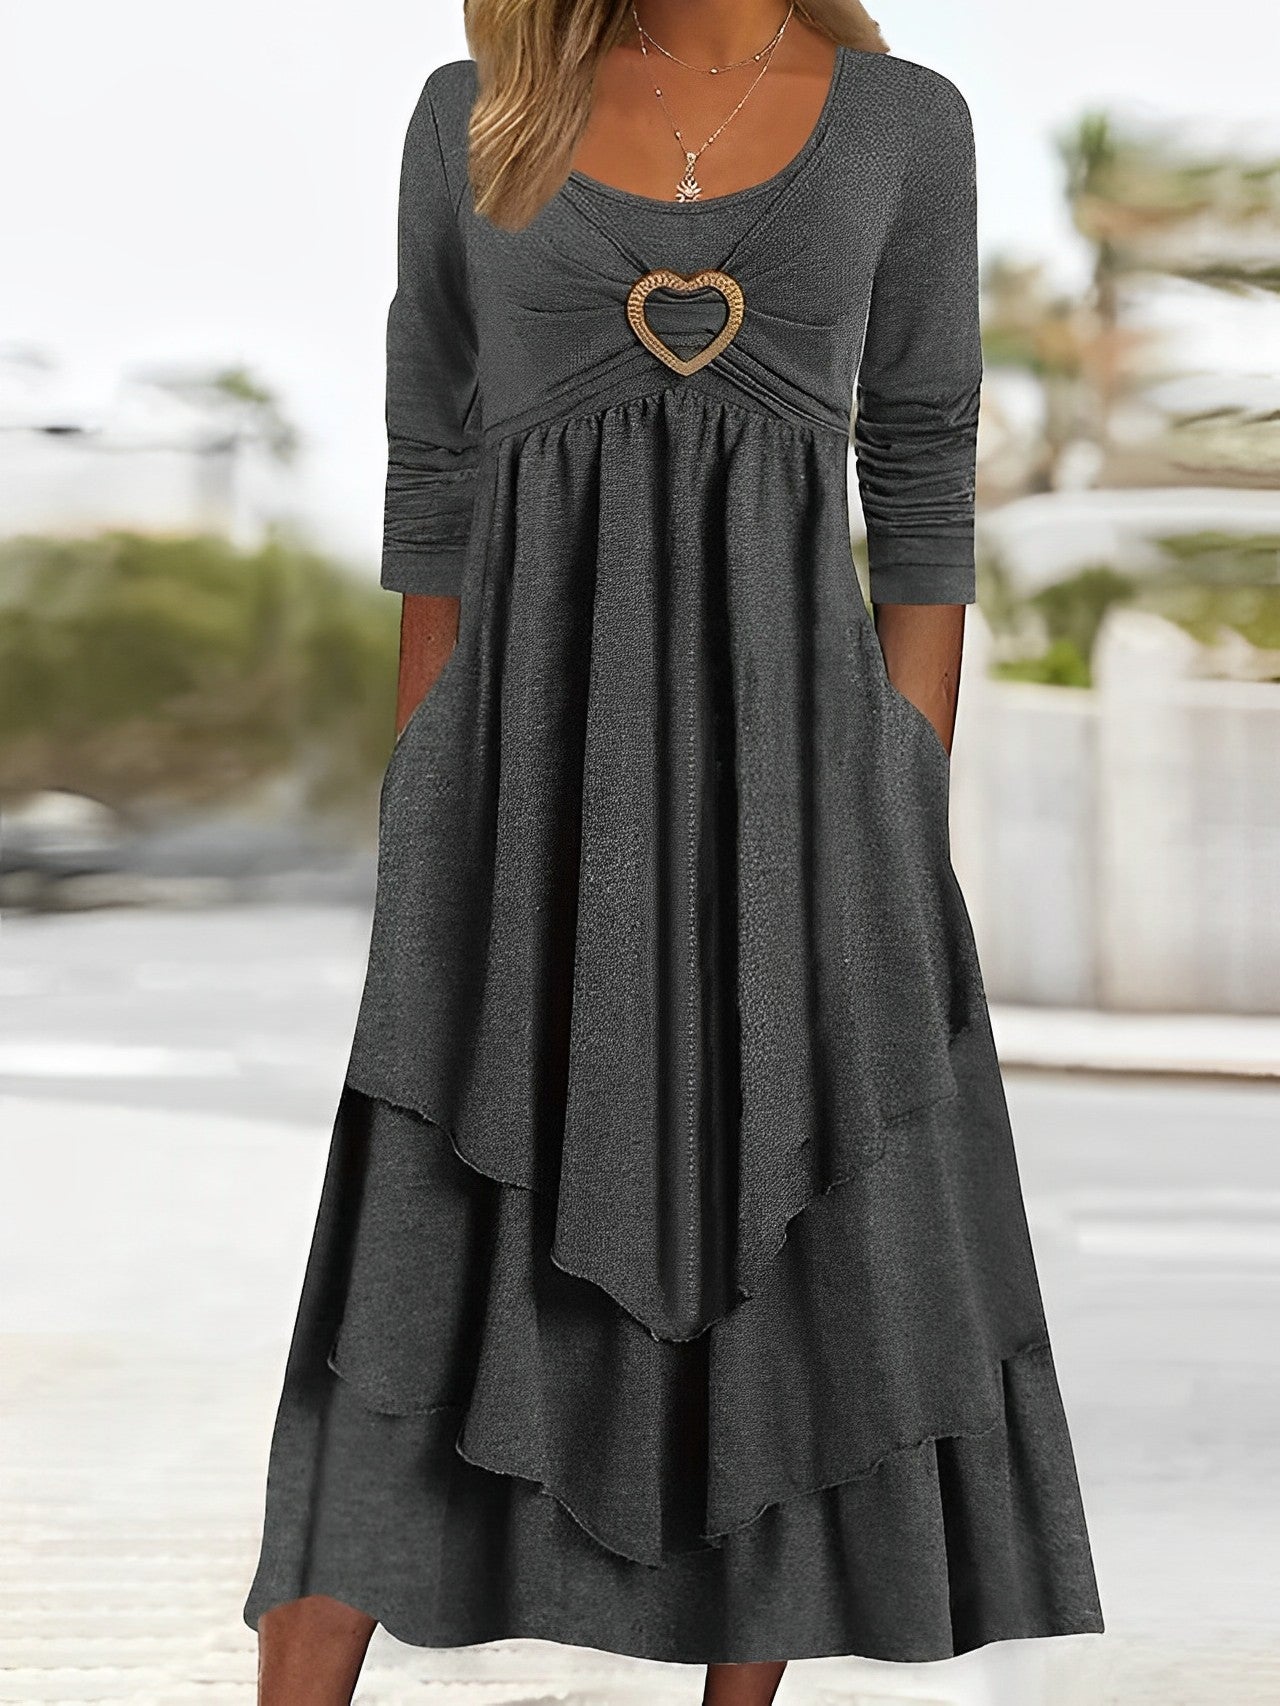 Elle&Vire® - Stylish summer heart dress